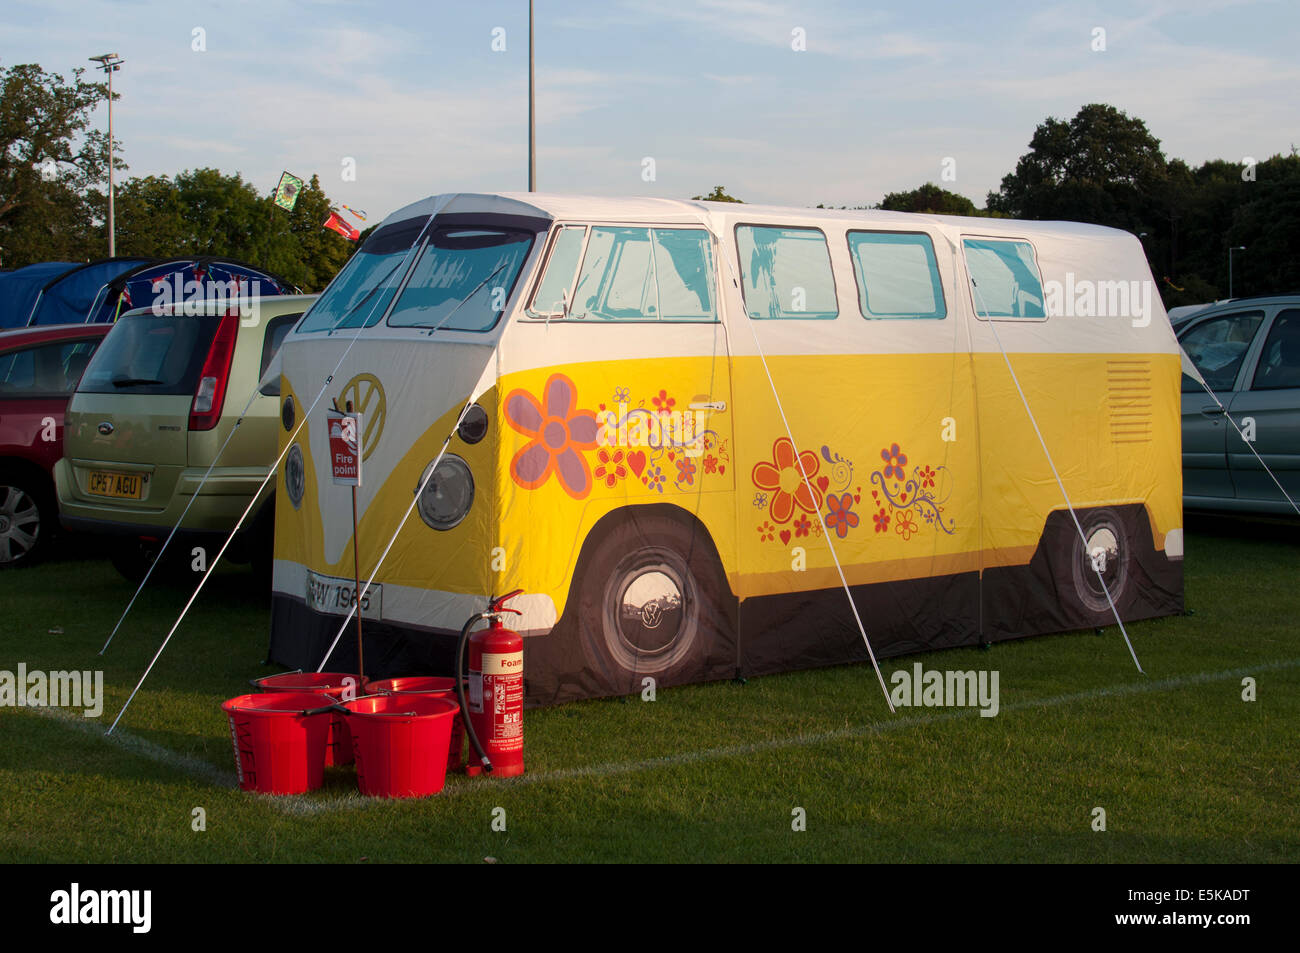 VW camper van tent at Warwick Folk Festival campsite Stock Photo